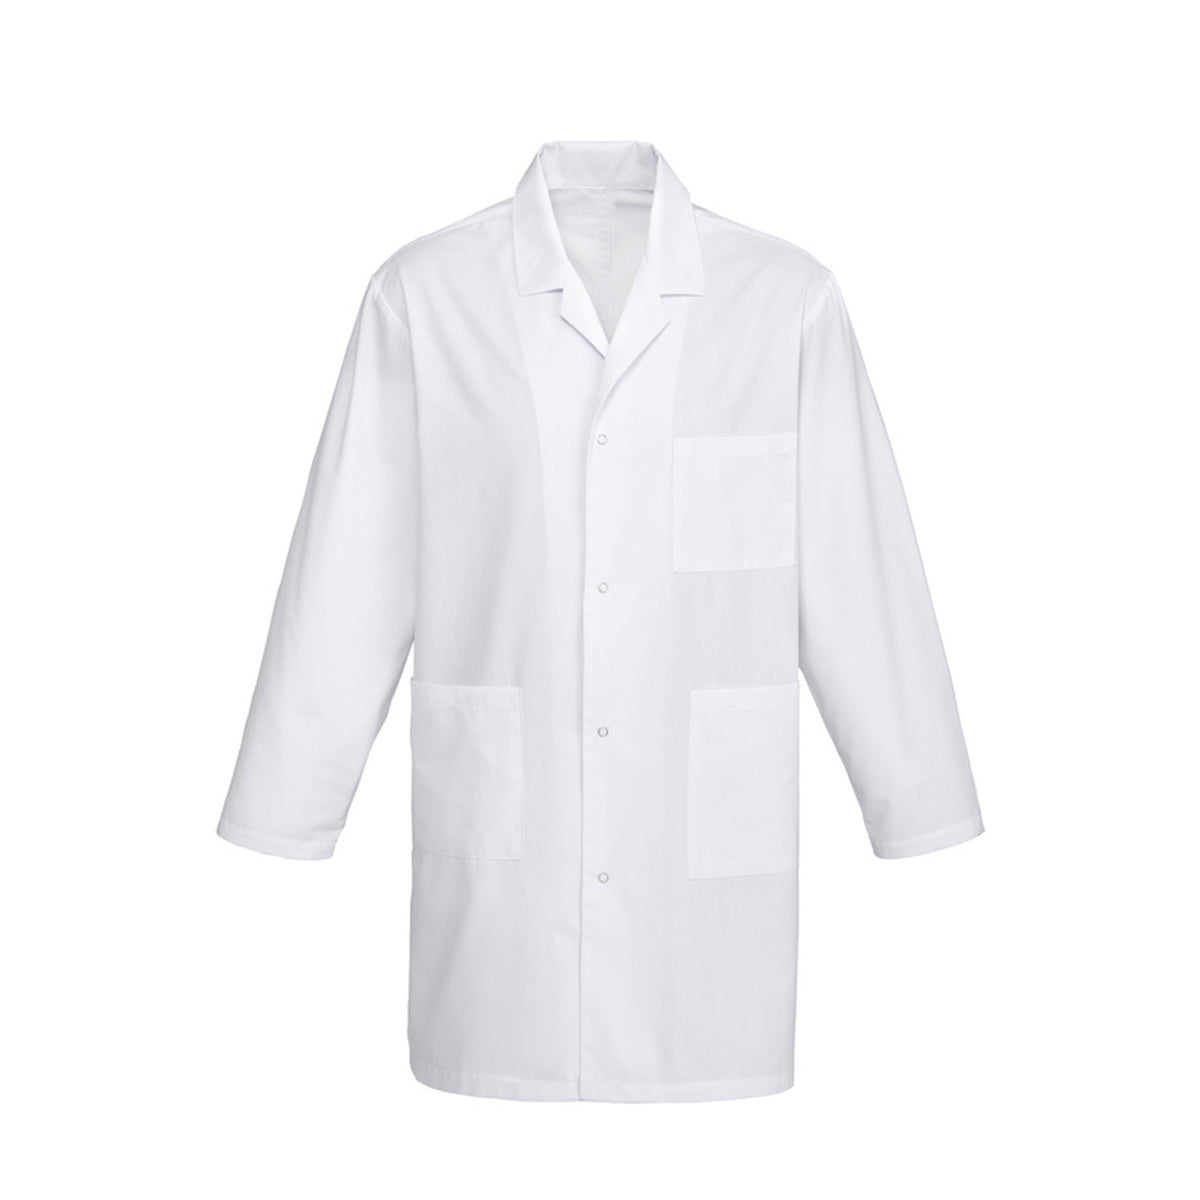 biz collection unisex classic lab coat in white